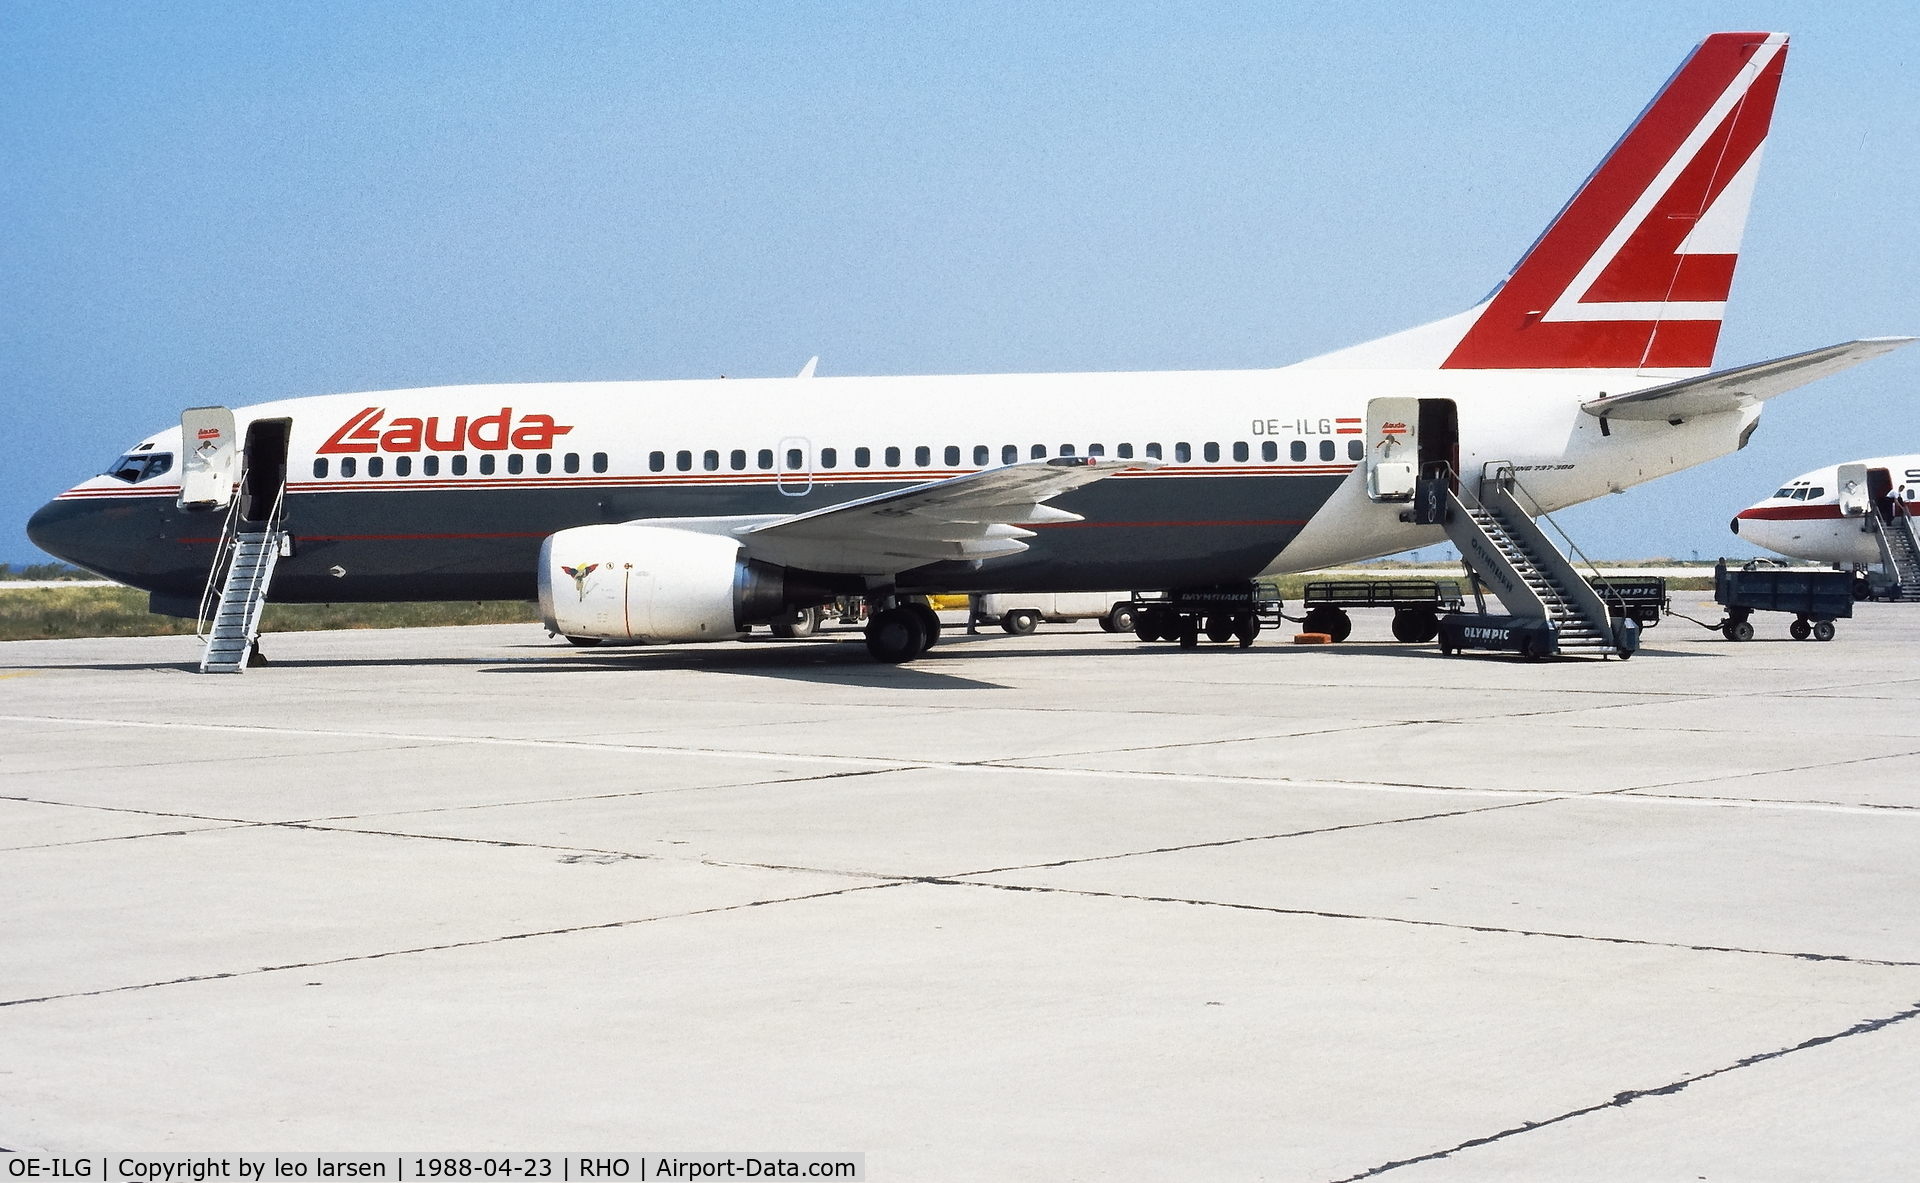 OE-ILG, 1988 Boeing 737-3Z9 C/N 24081, Rhodos 23.4.1988